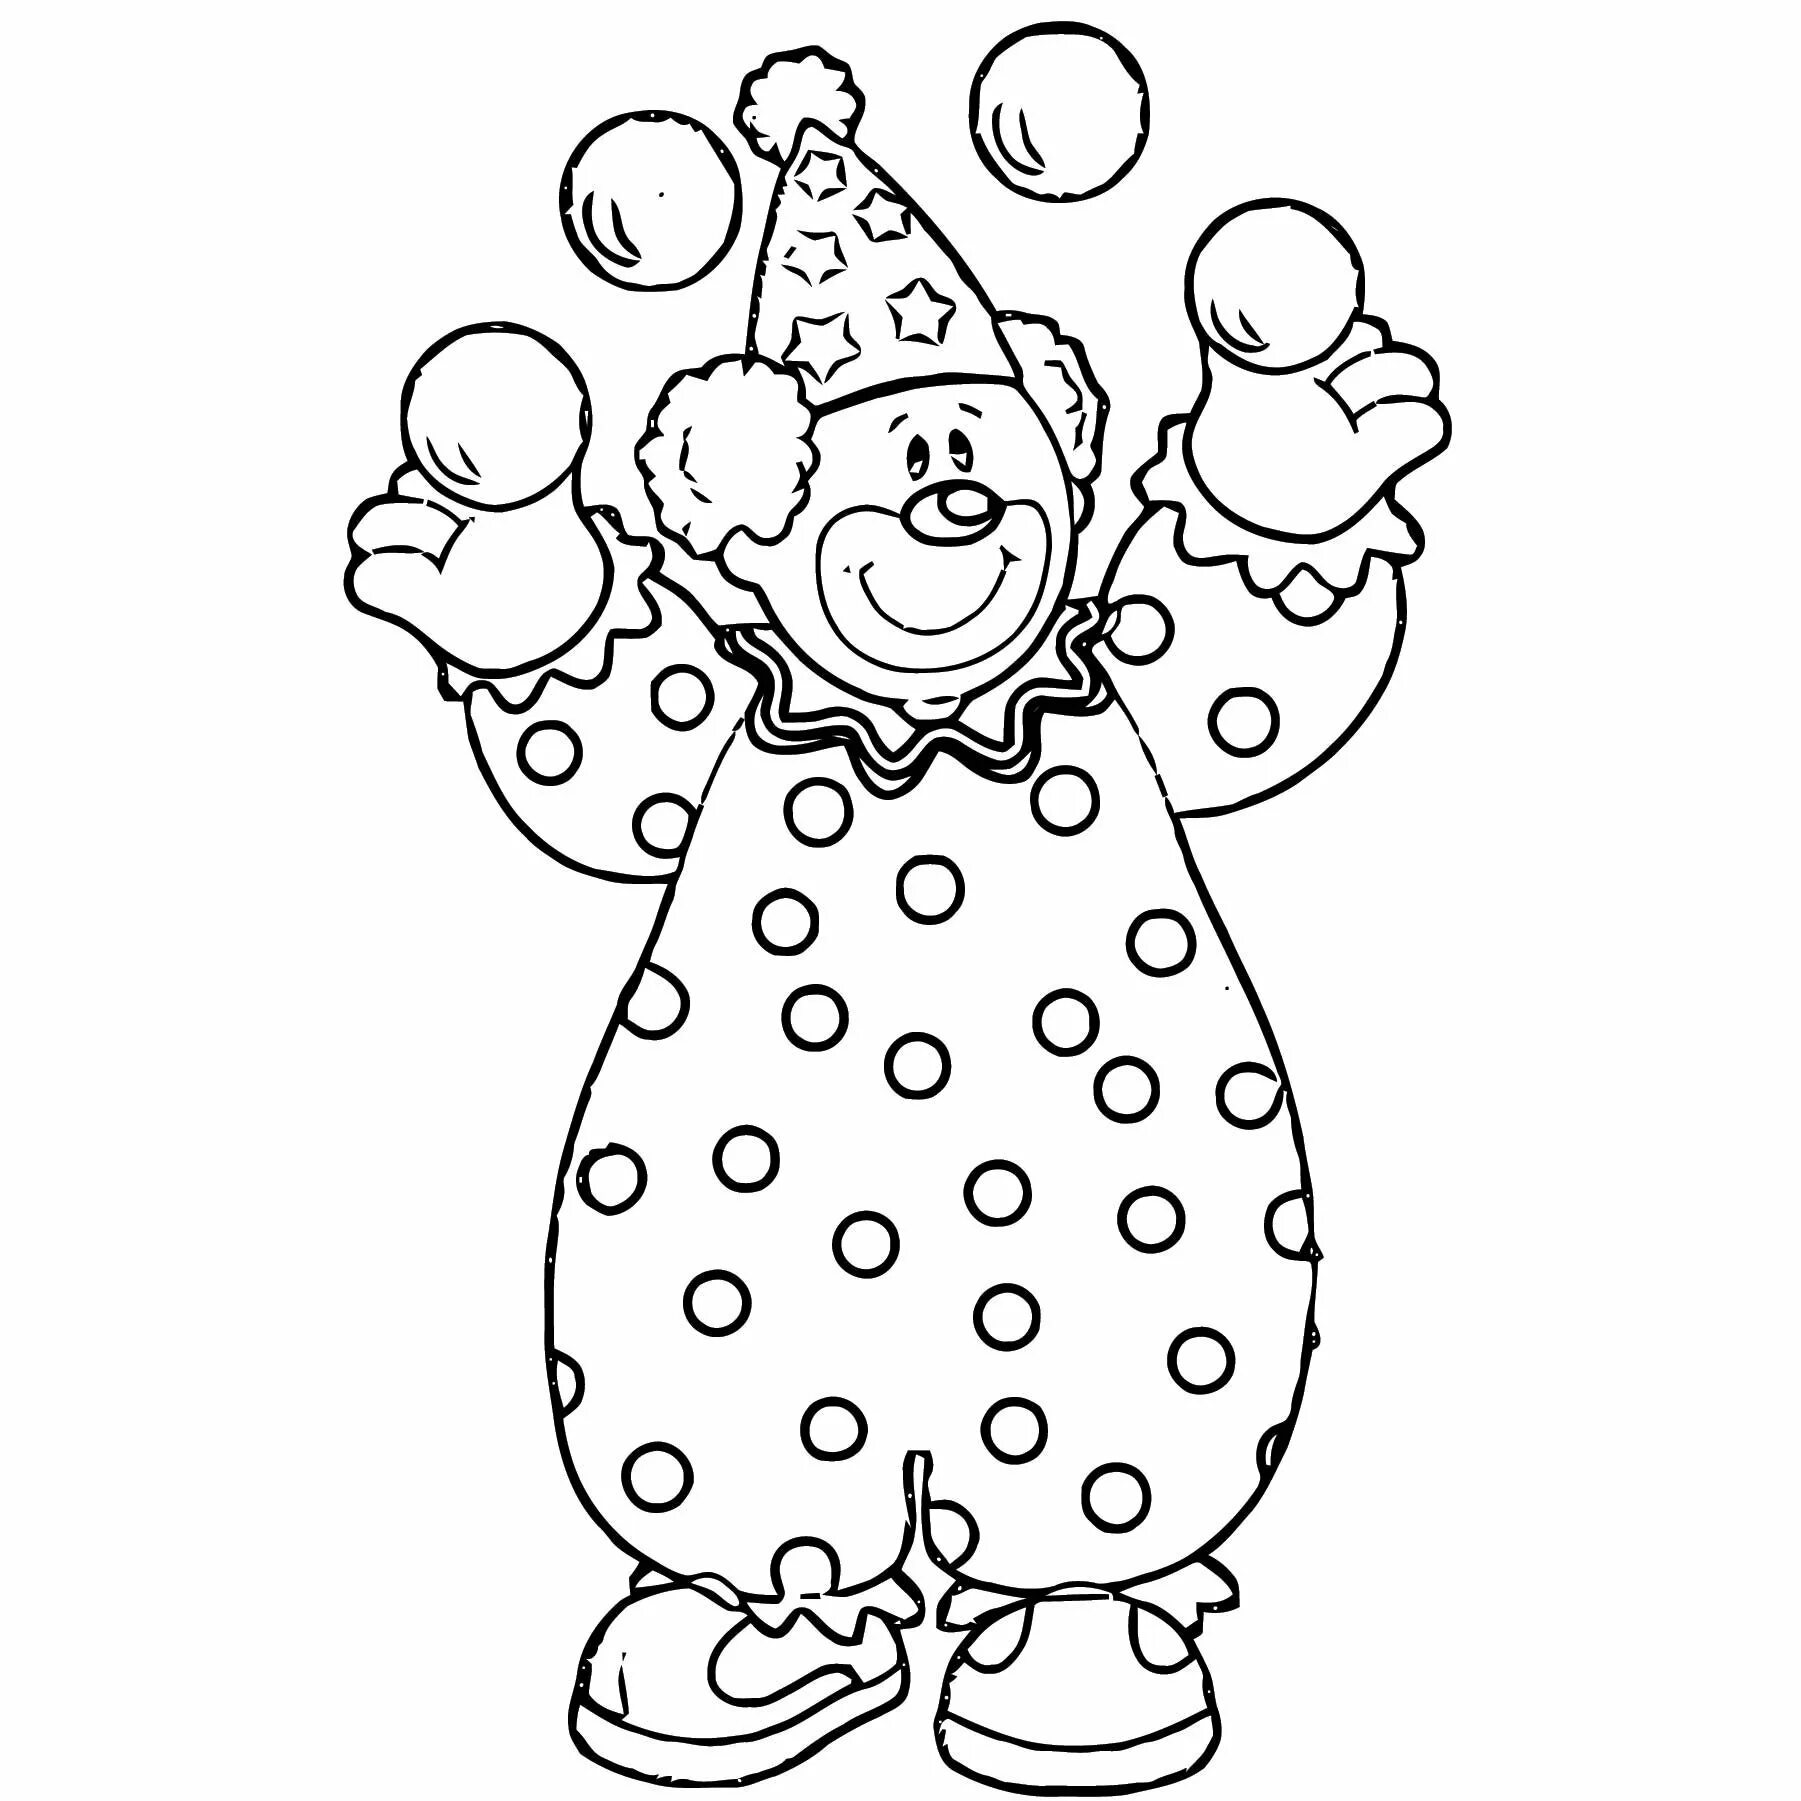 Клоун раскраска для детей 4 5 лет. Клоун раскраска. Клоун раскраска для детей. Клоун петрушка раскраска. Грустный клоун раскраска.